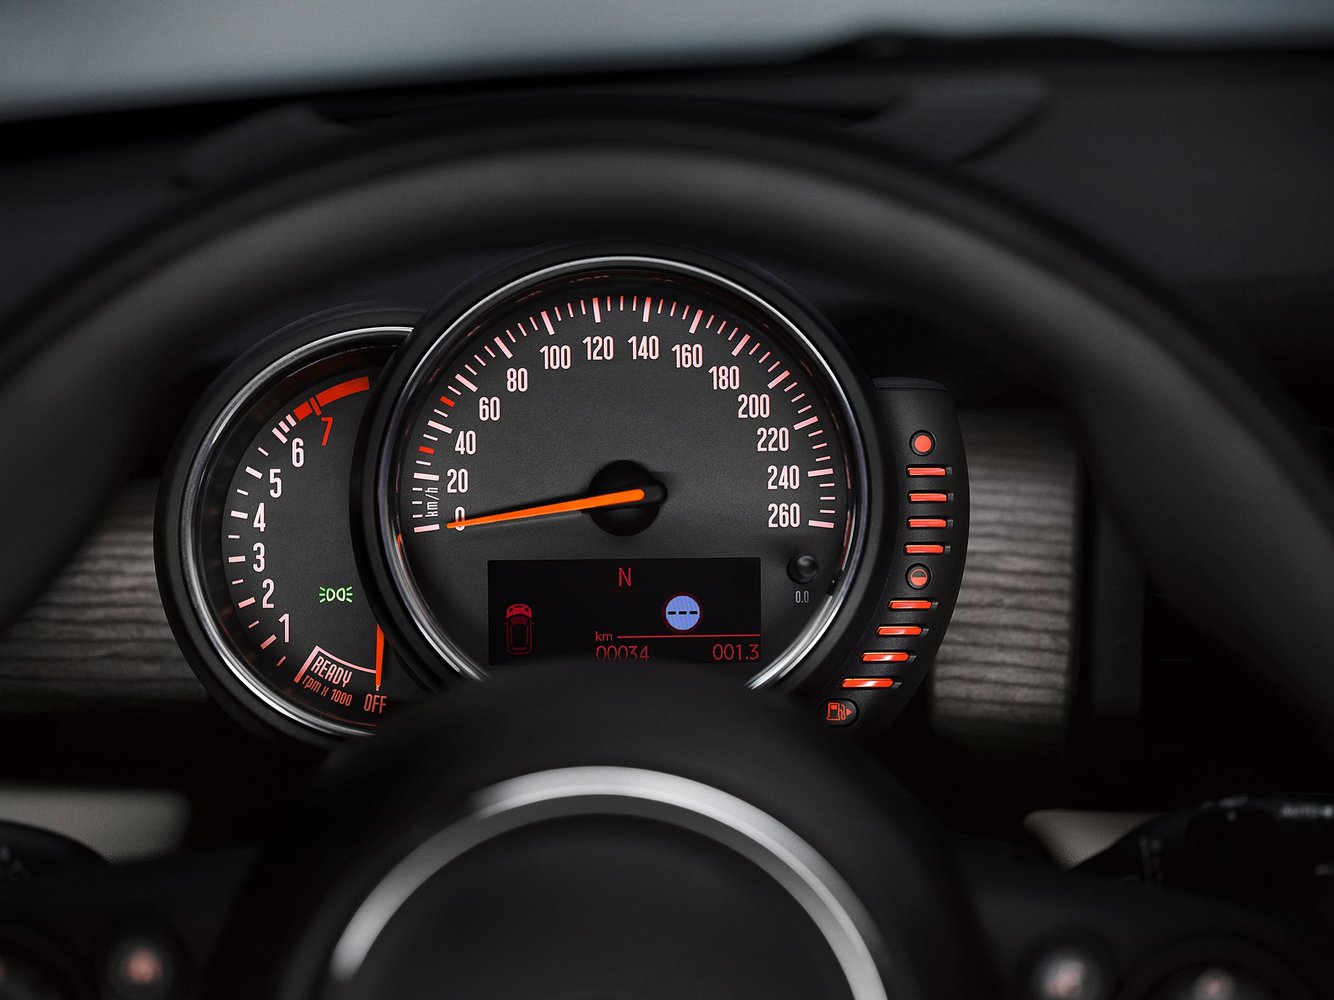 хэтчбек 5 дв. Cooper S MINI Hatch 2014 - 2016г выпуска модификация 2.0 AT (170 л.с.)